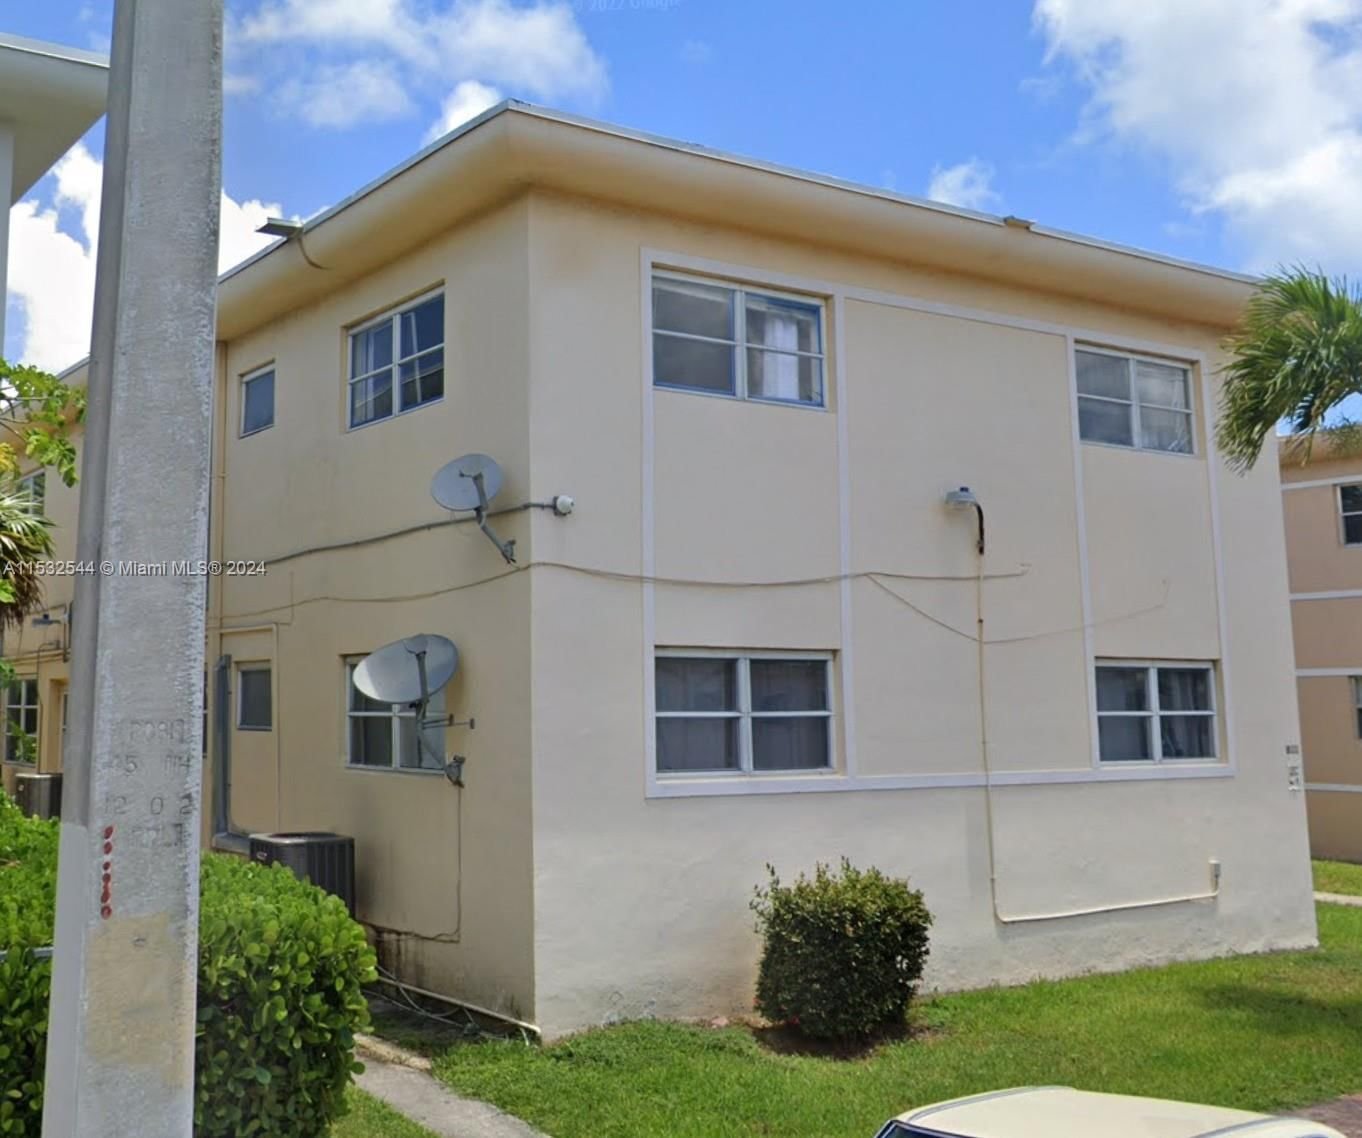 Real estate property located at 833 85th St, Miami-Dade County, Miami Beach, FL